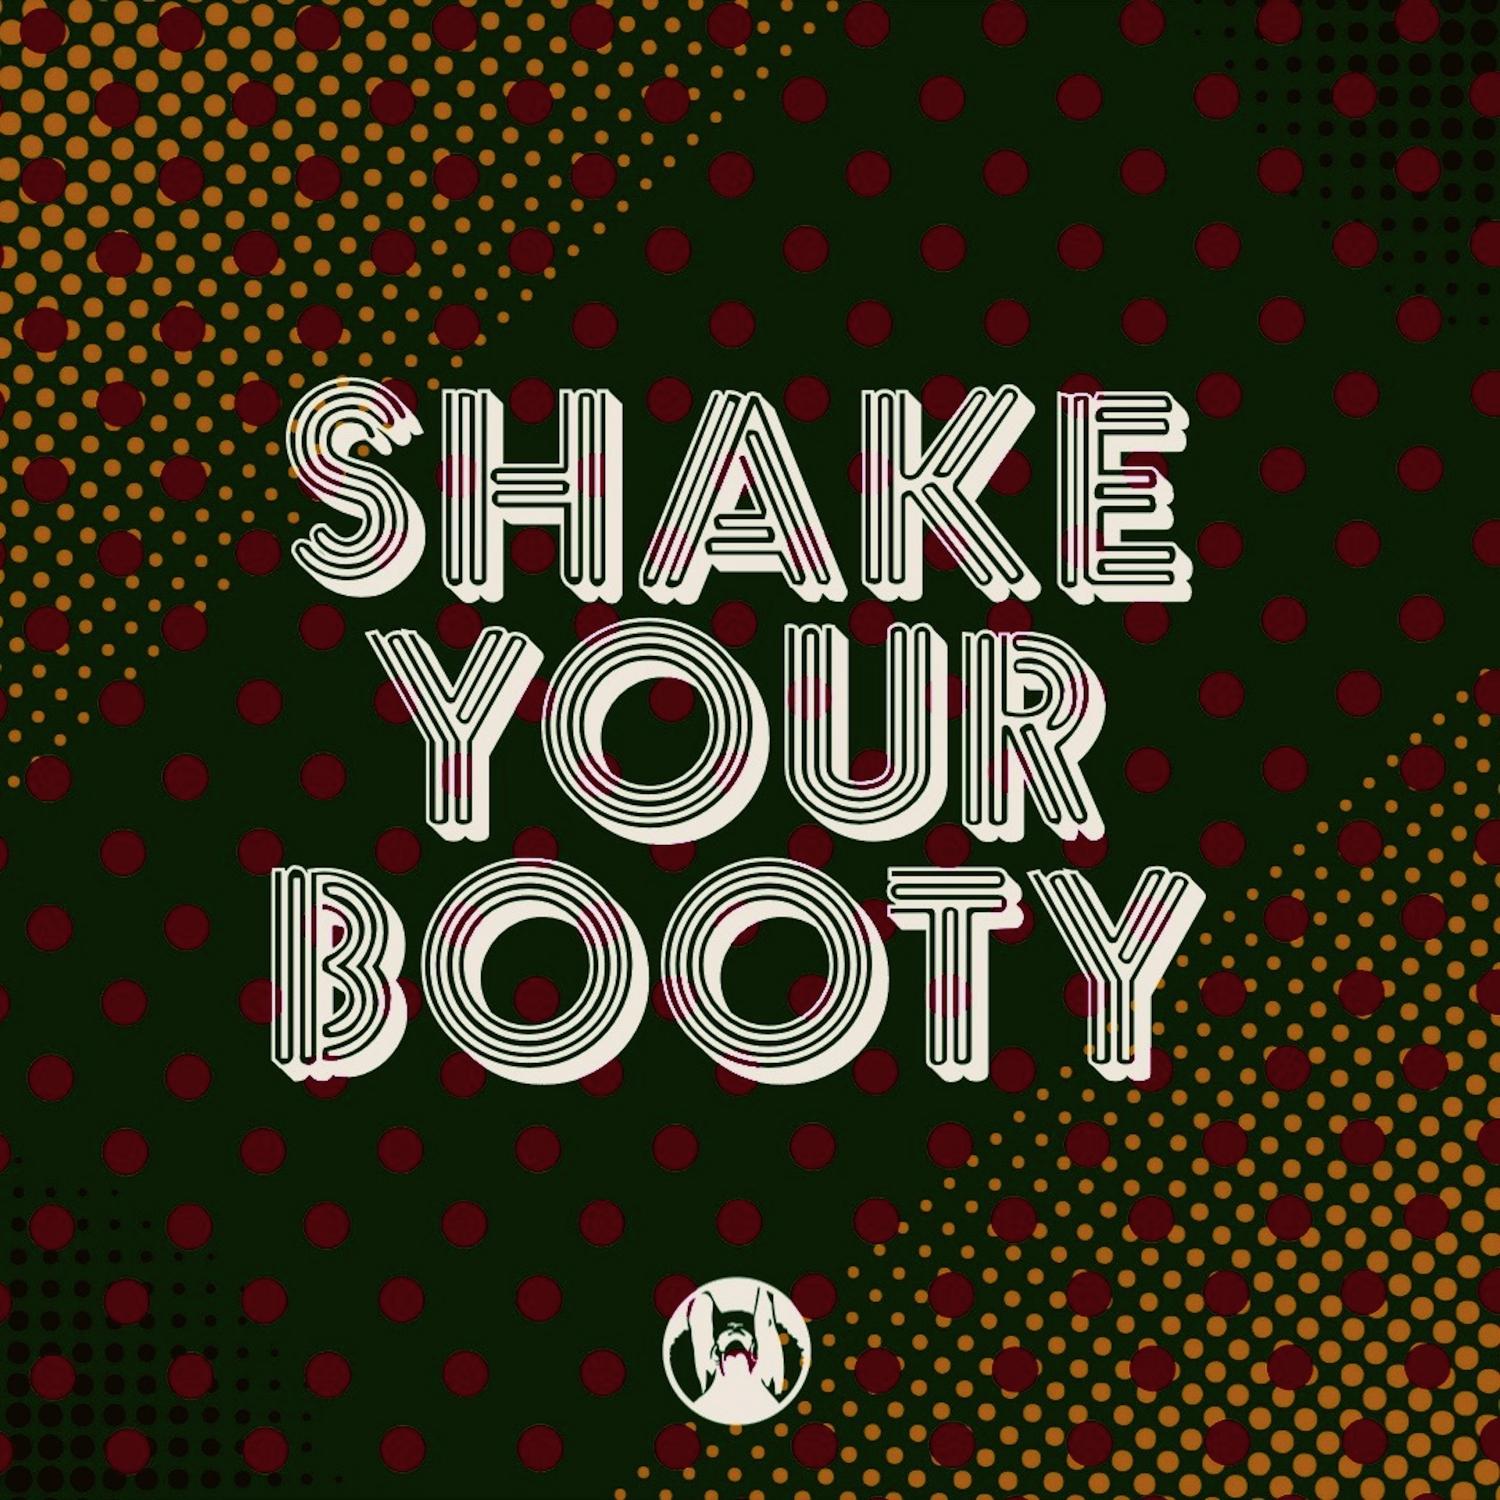 House of Prayers - Shake Your Booty (Original Mix)